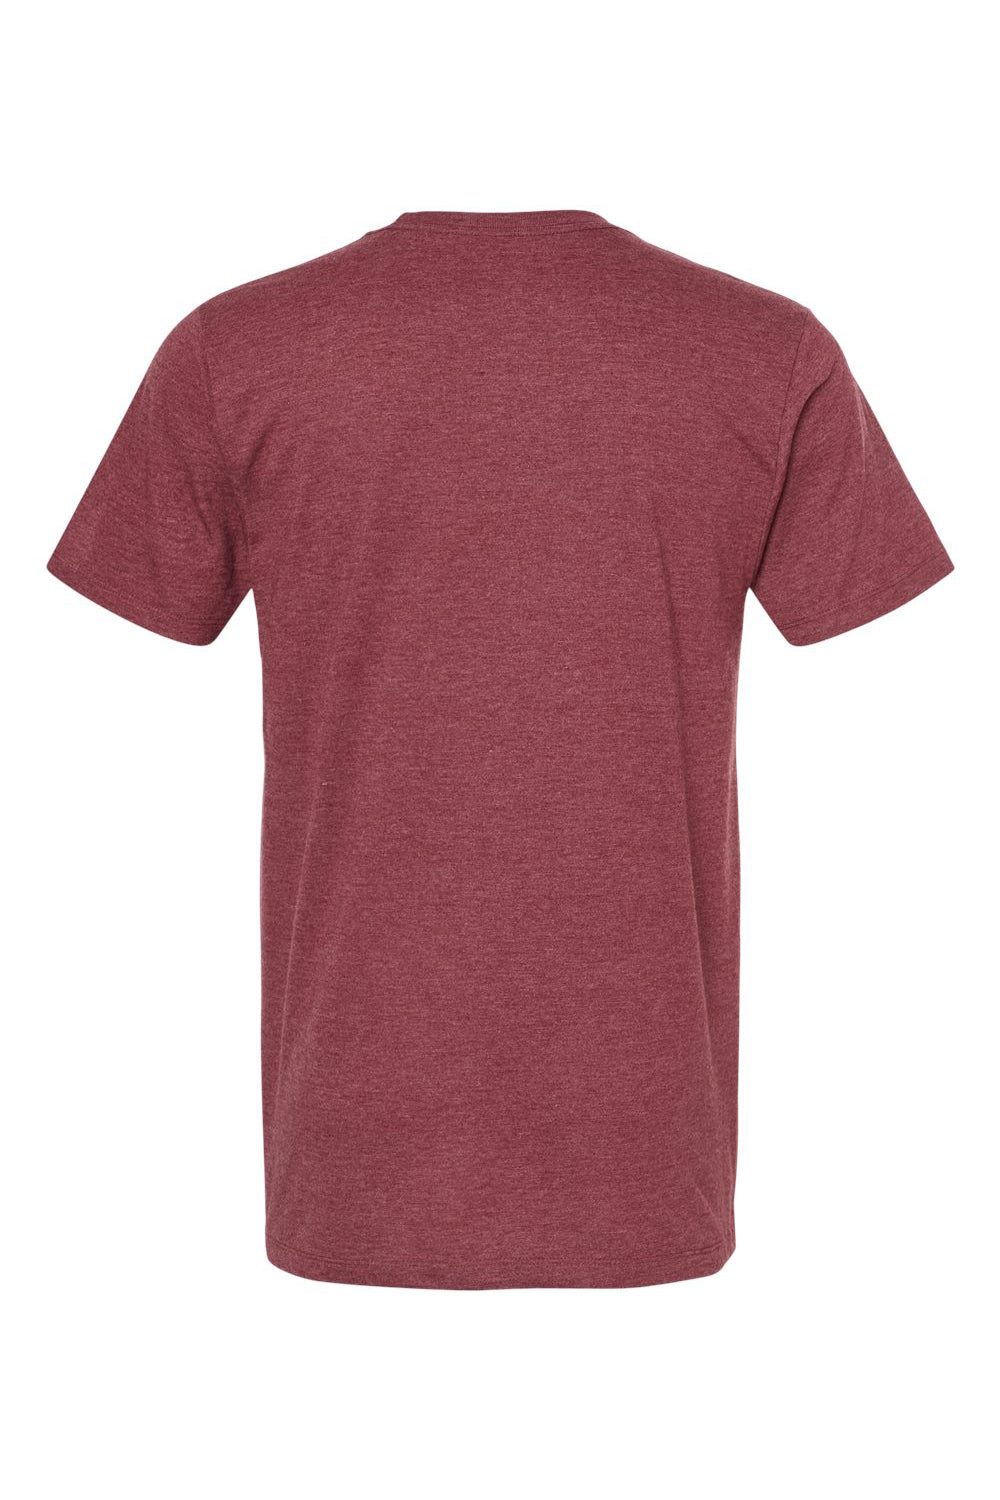 Tultex 541 Mens Premium Short Sleeve Crewneck T-Shirt Heather Burgundy Flat Back